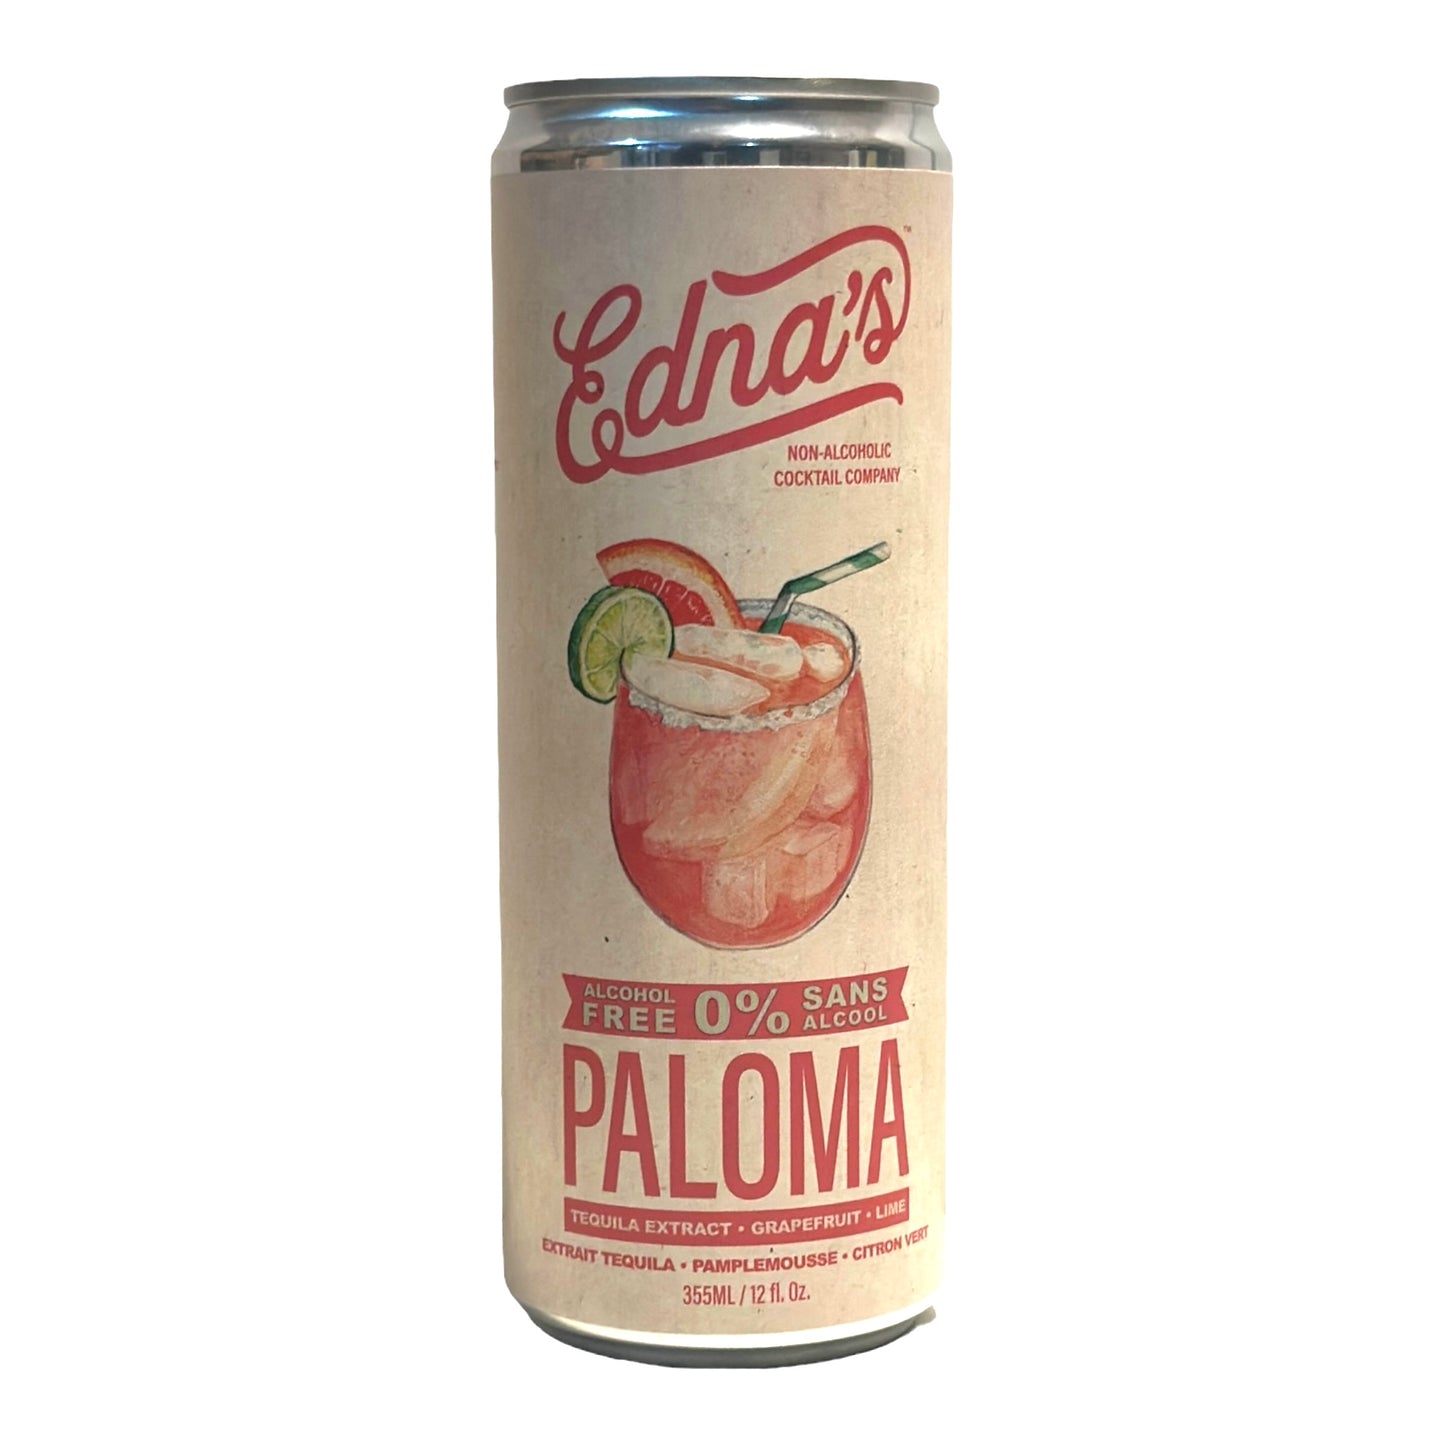 EDNA'S PALOMA NON-ALCOHOLIC